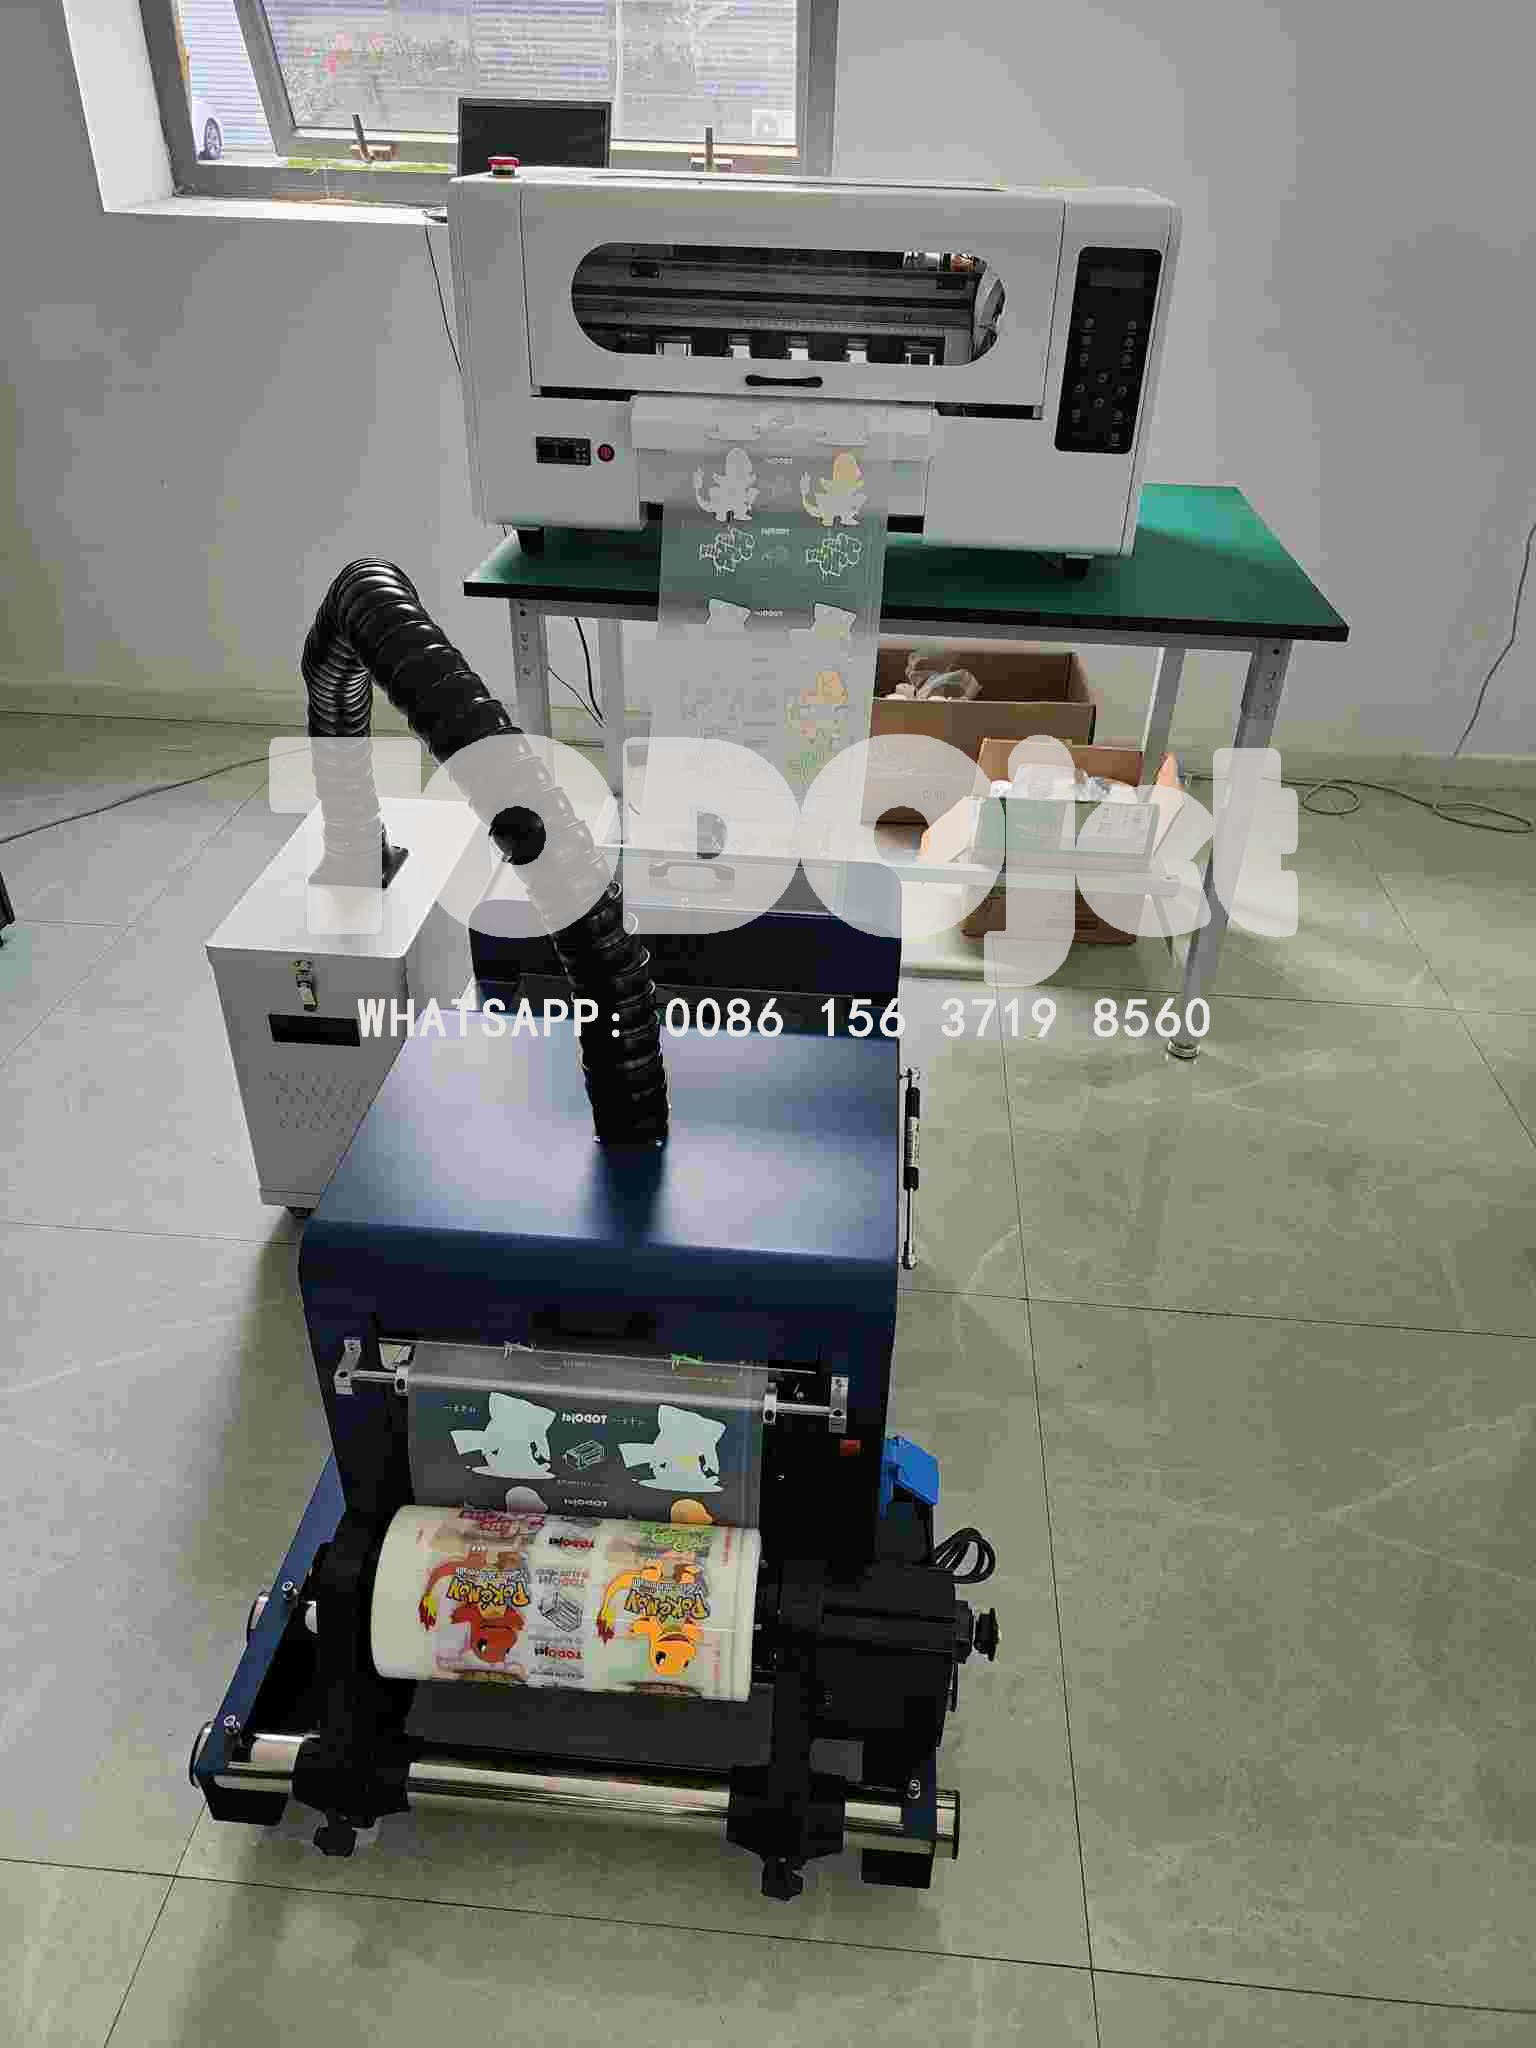 2022 TODOjet New product DTF T-shirt PET Film Printer No Need Cutting Plotter with Hot Melt Powder Shaking Machine